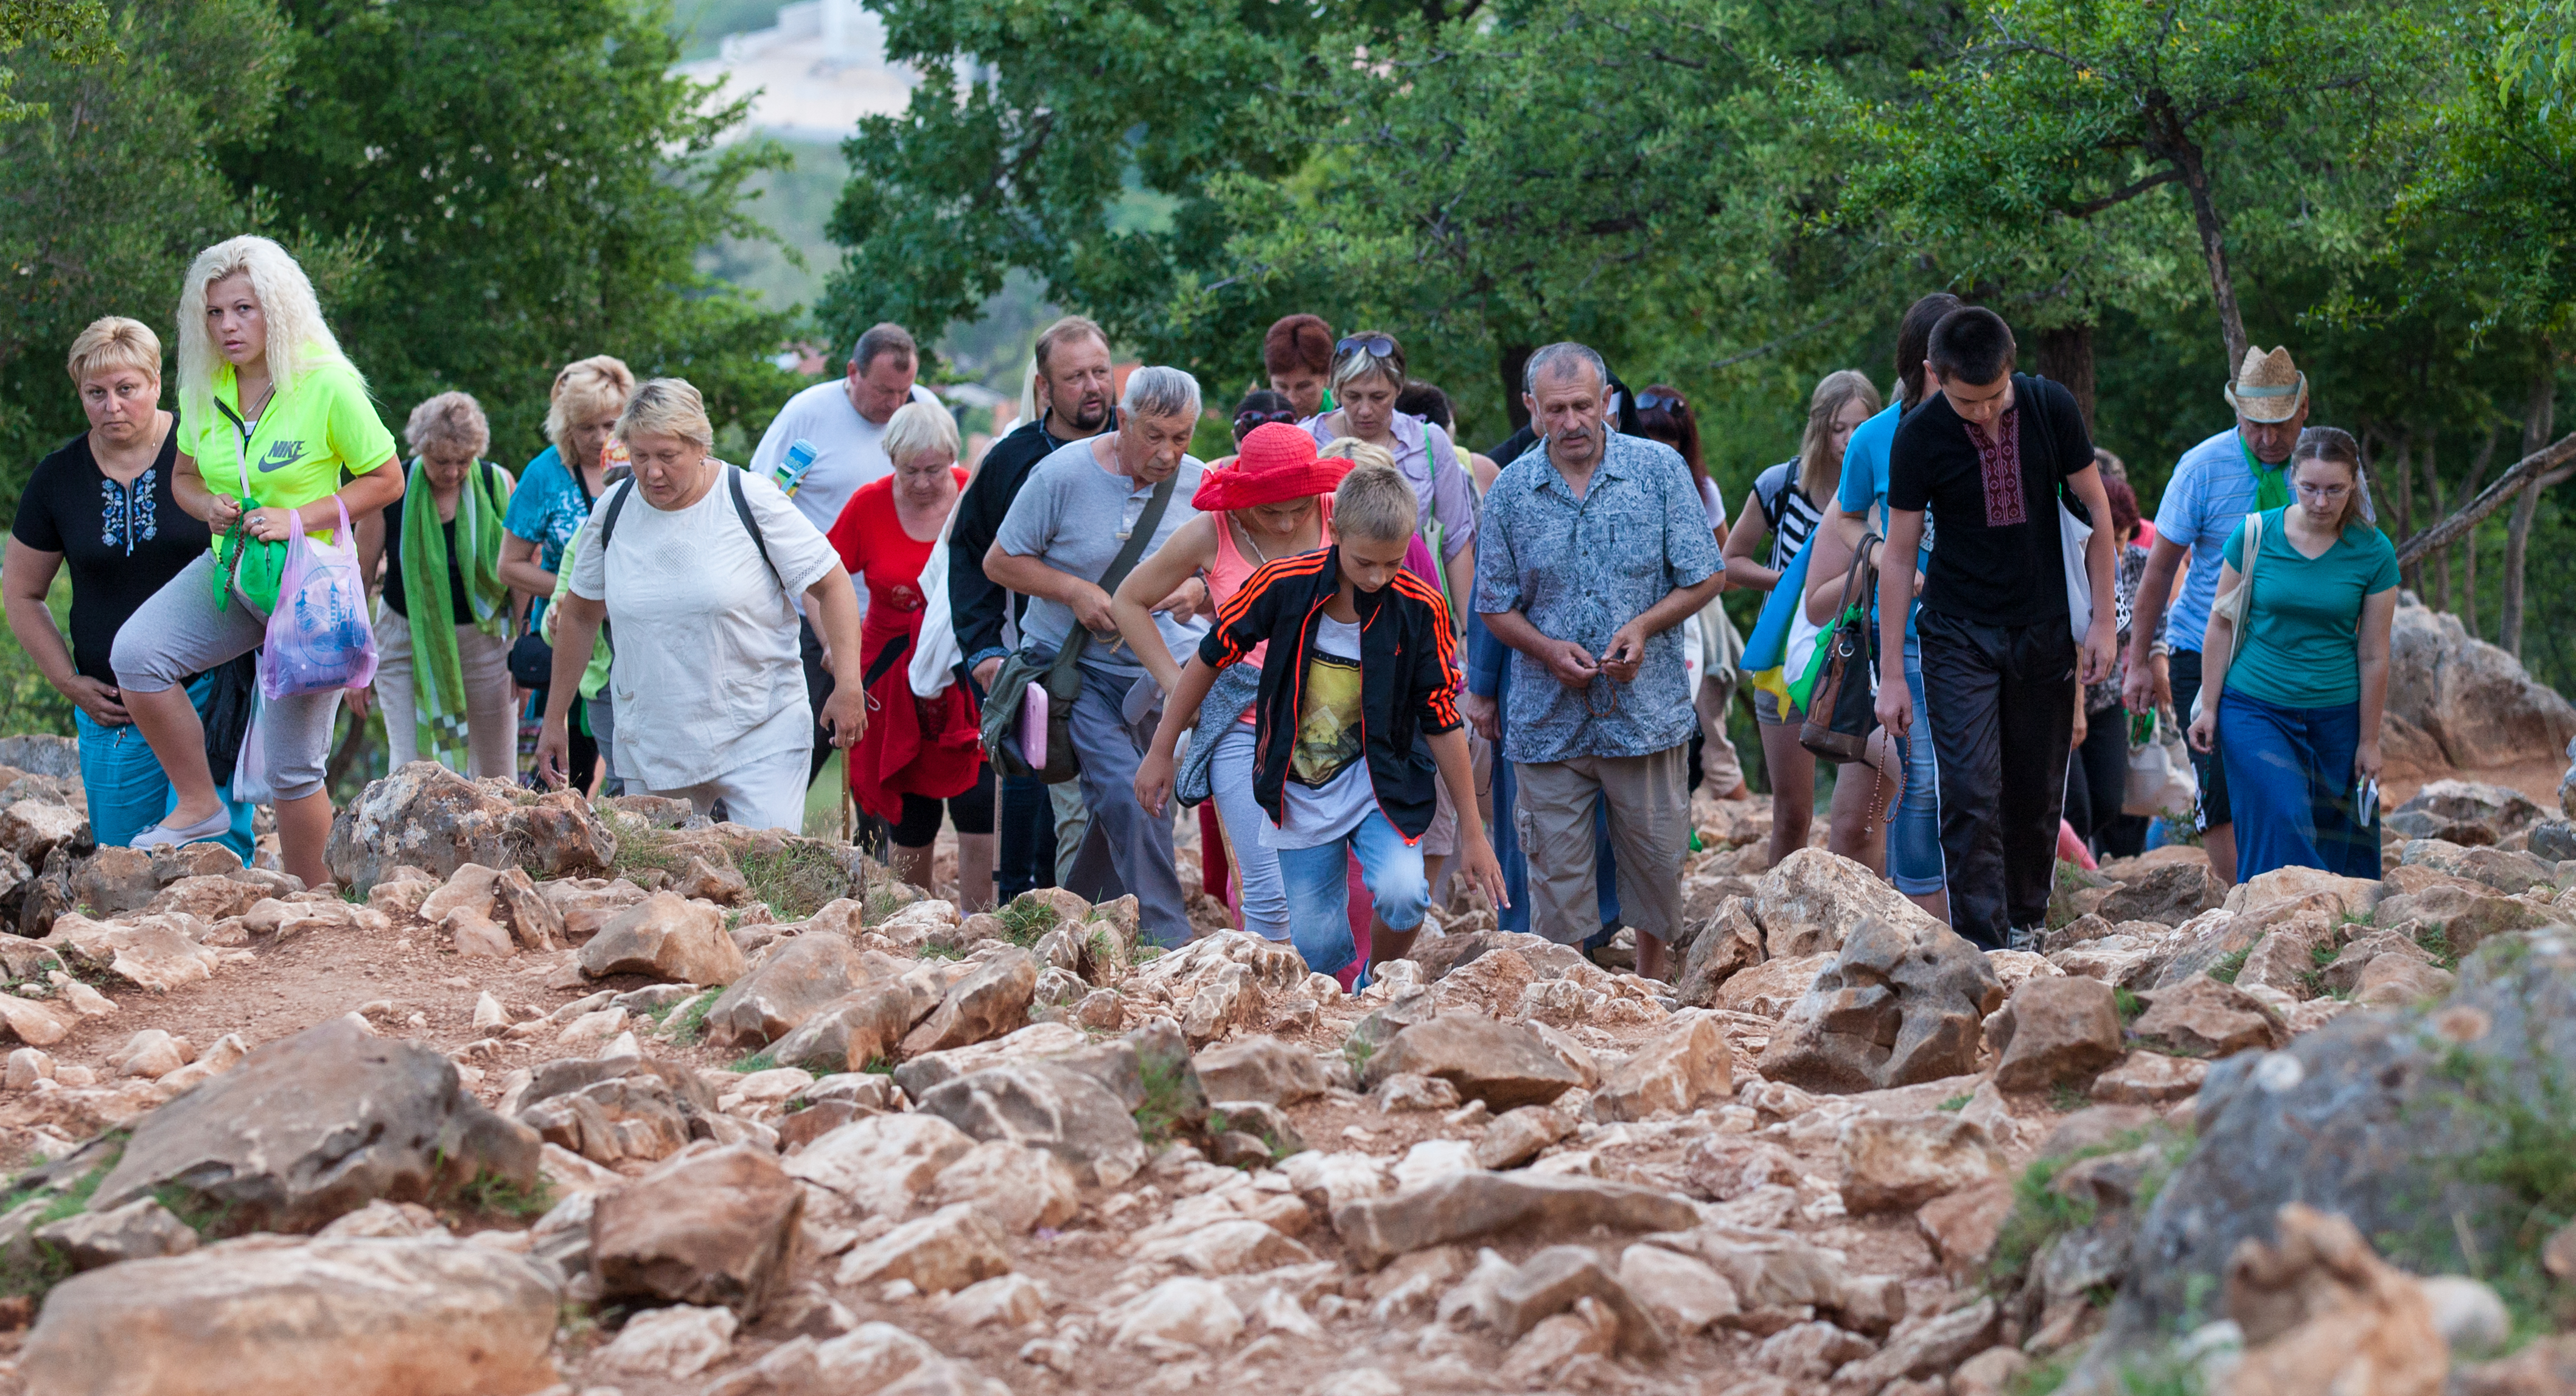 pilgrims in Medjugorje, Bosnia, July 2014, picture 6